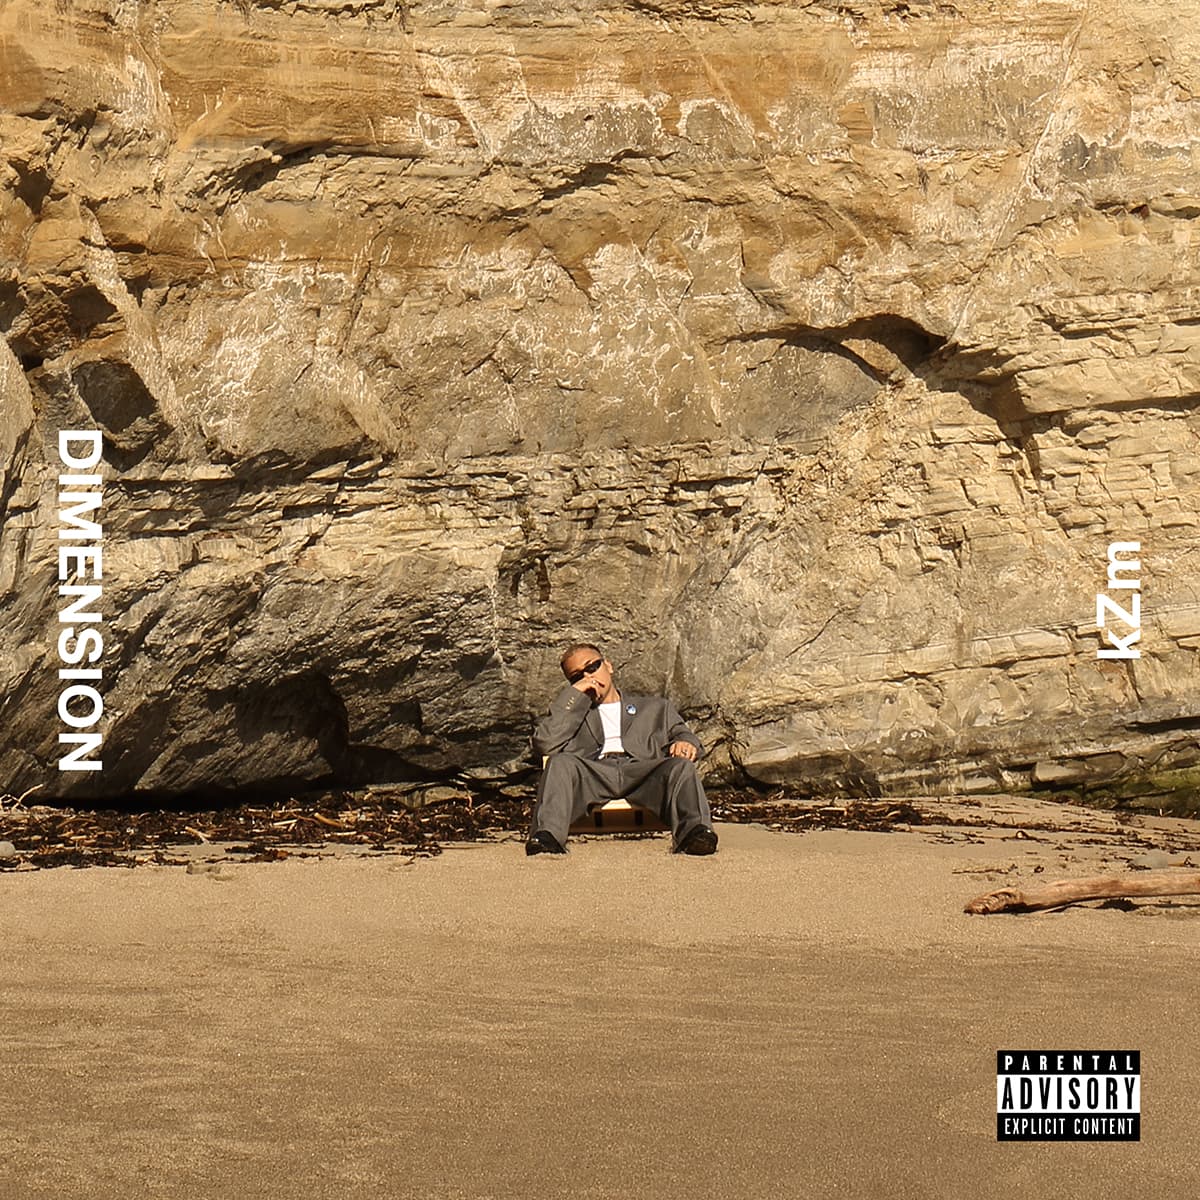 kZm - 1st Album "DIMENSION" Release